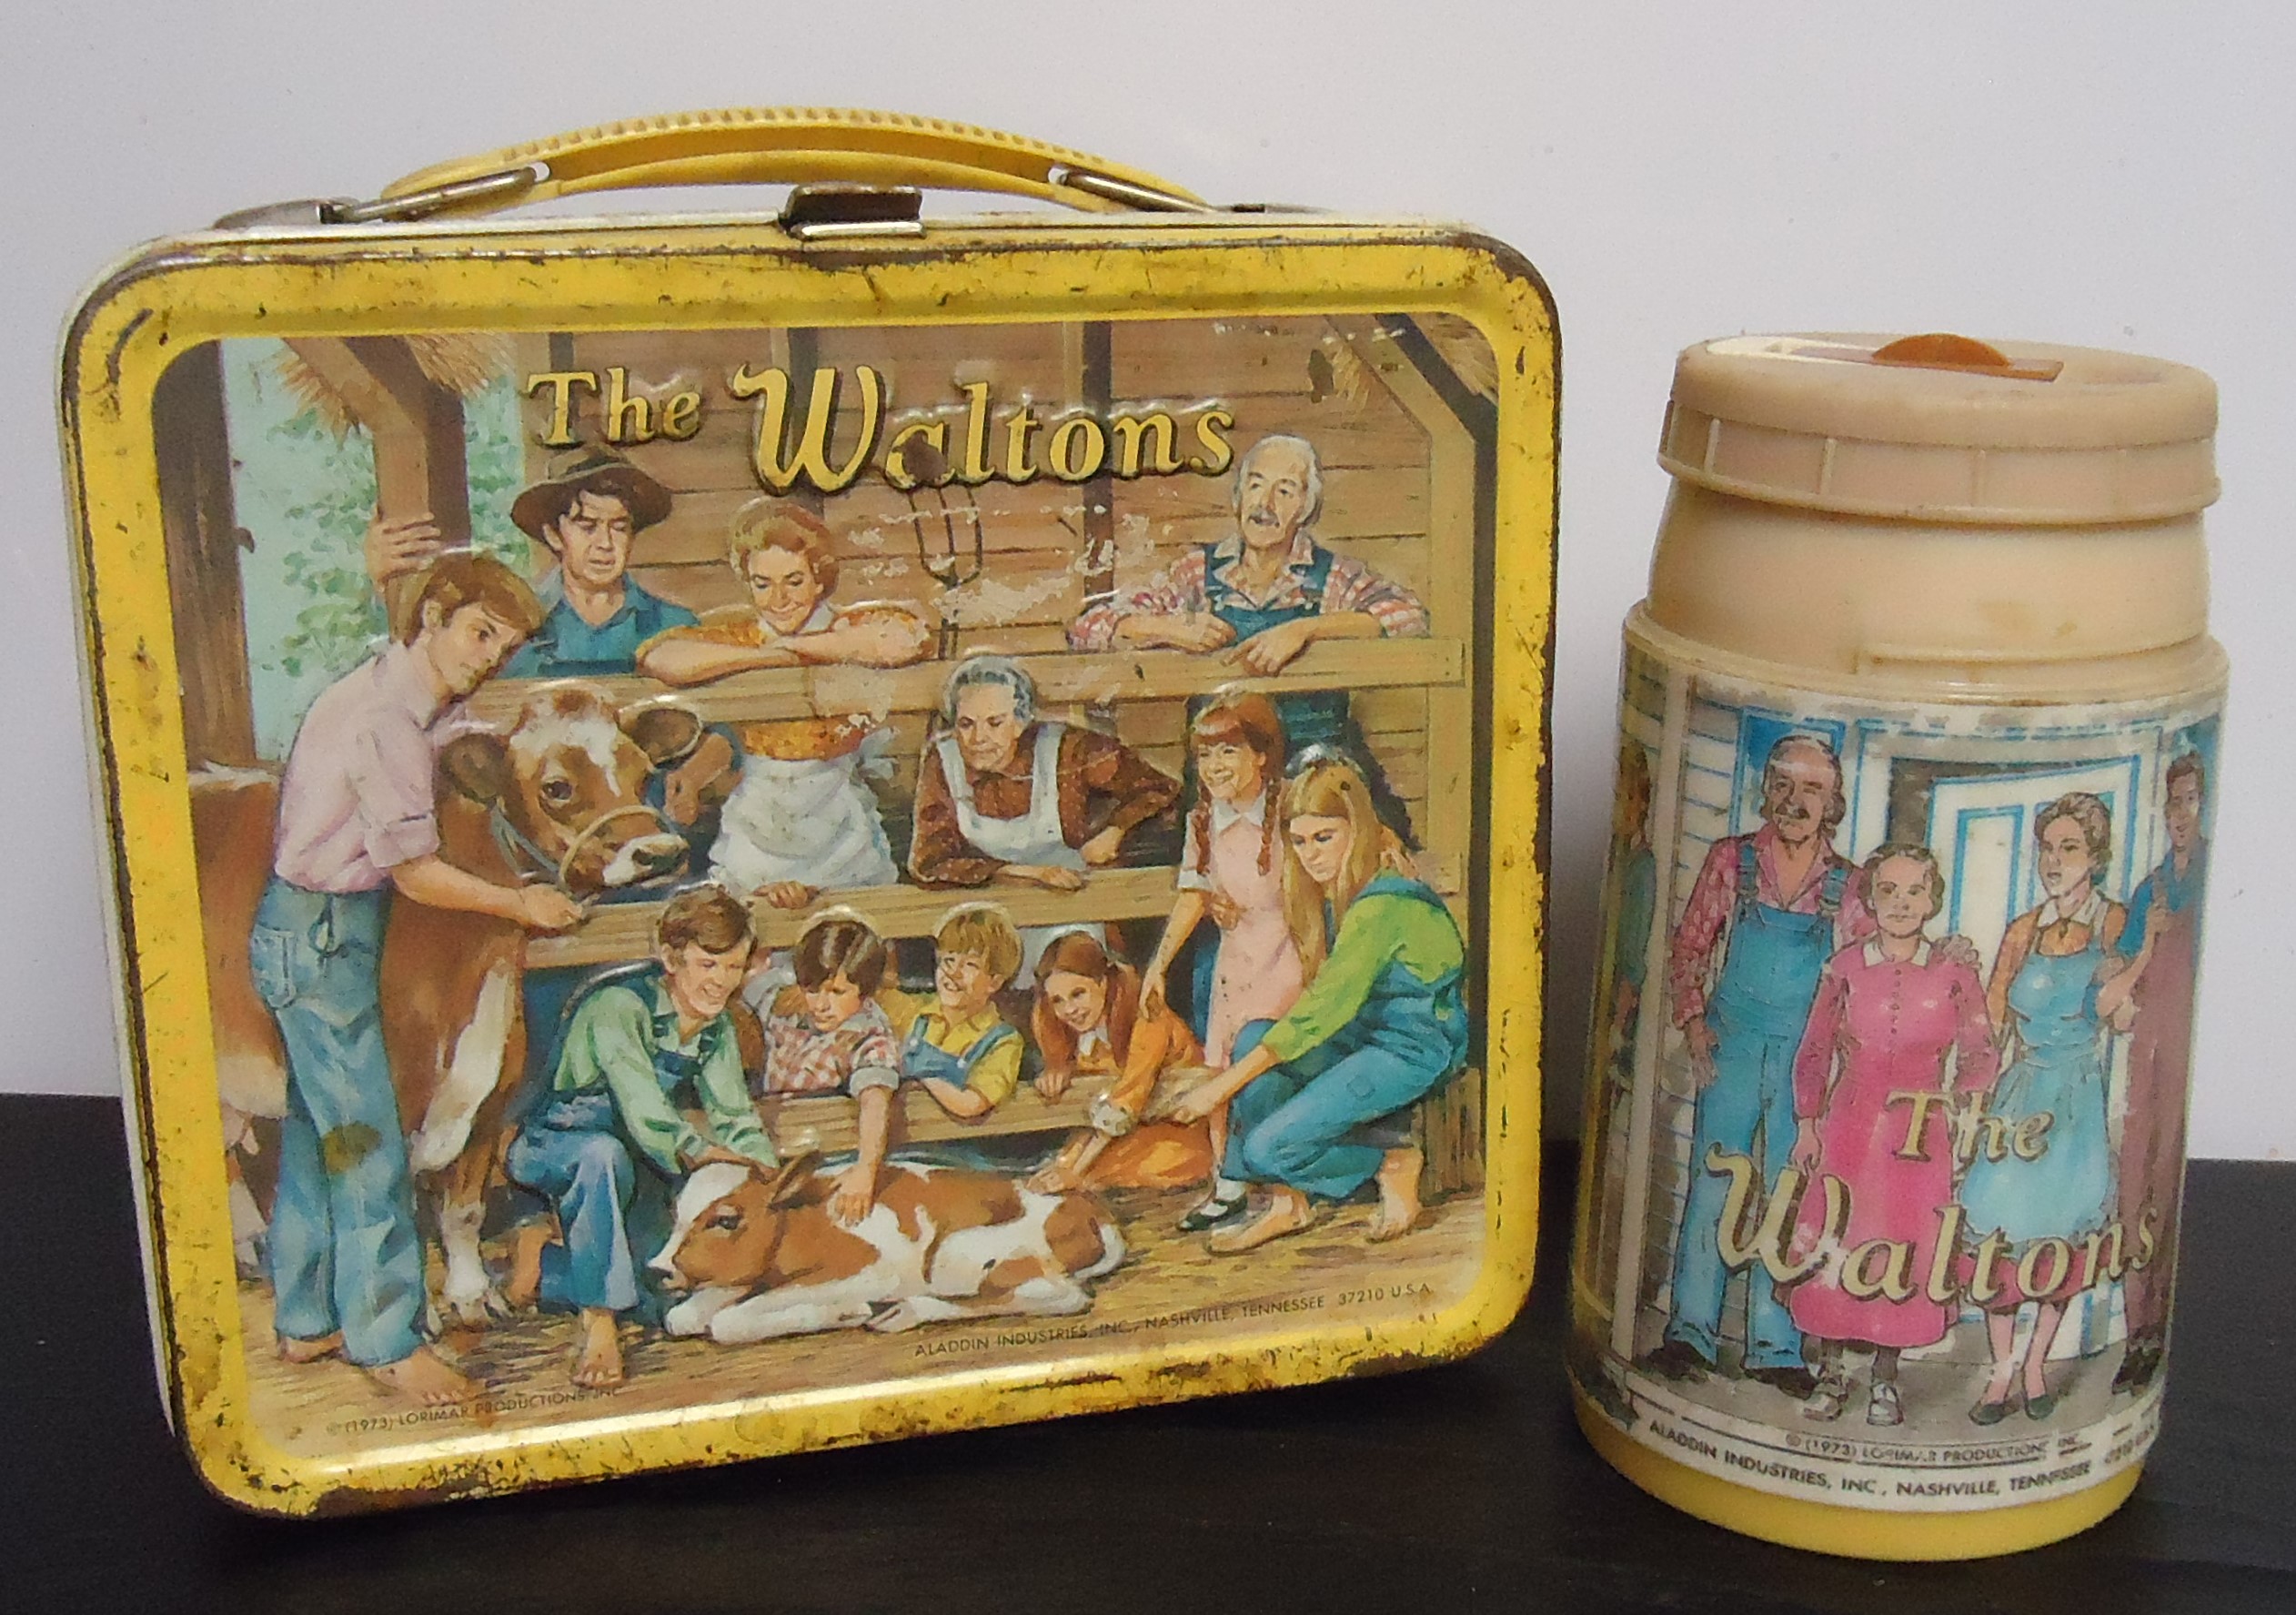 (16) "The Walton's" Metal Lunch Box
W/ Thermos
$60.00